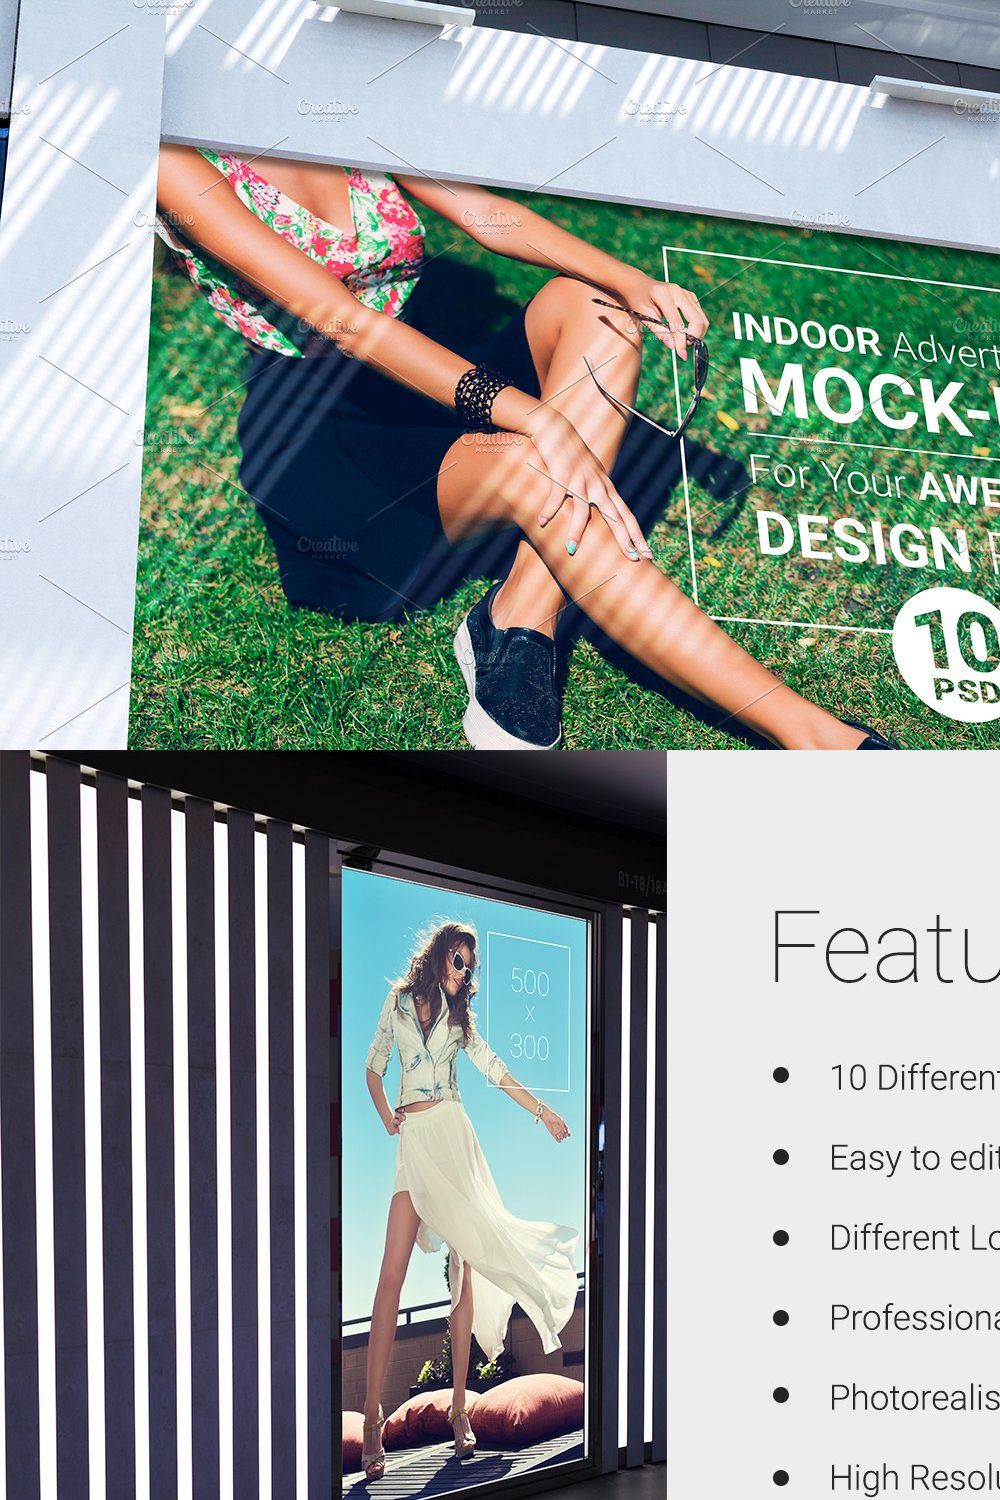 Indoor Advertising Mock-Up pinterest preview image.